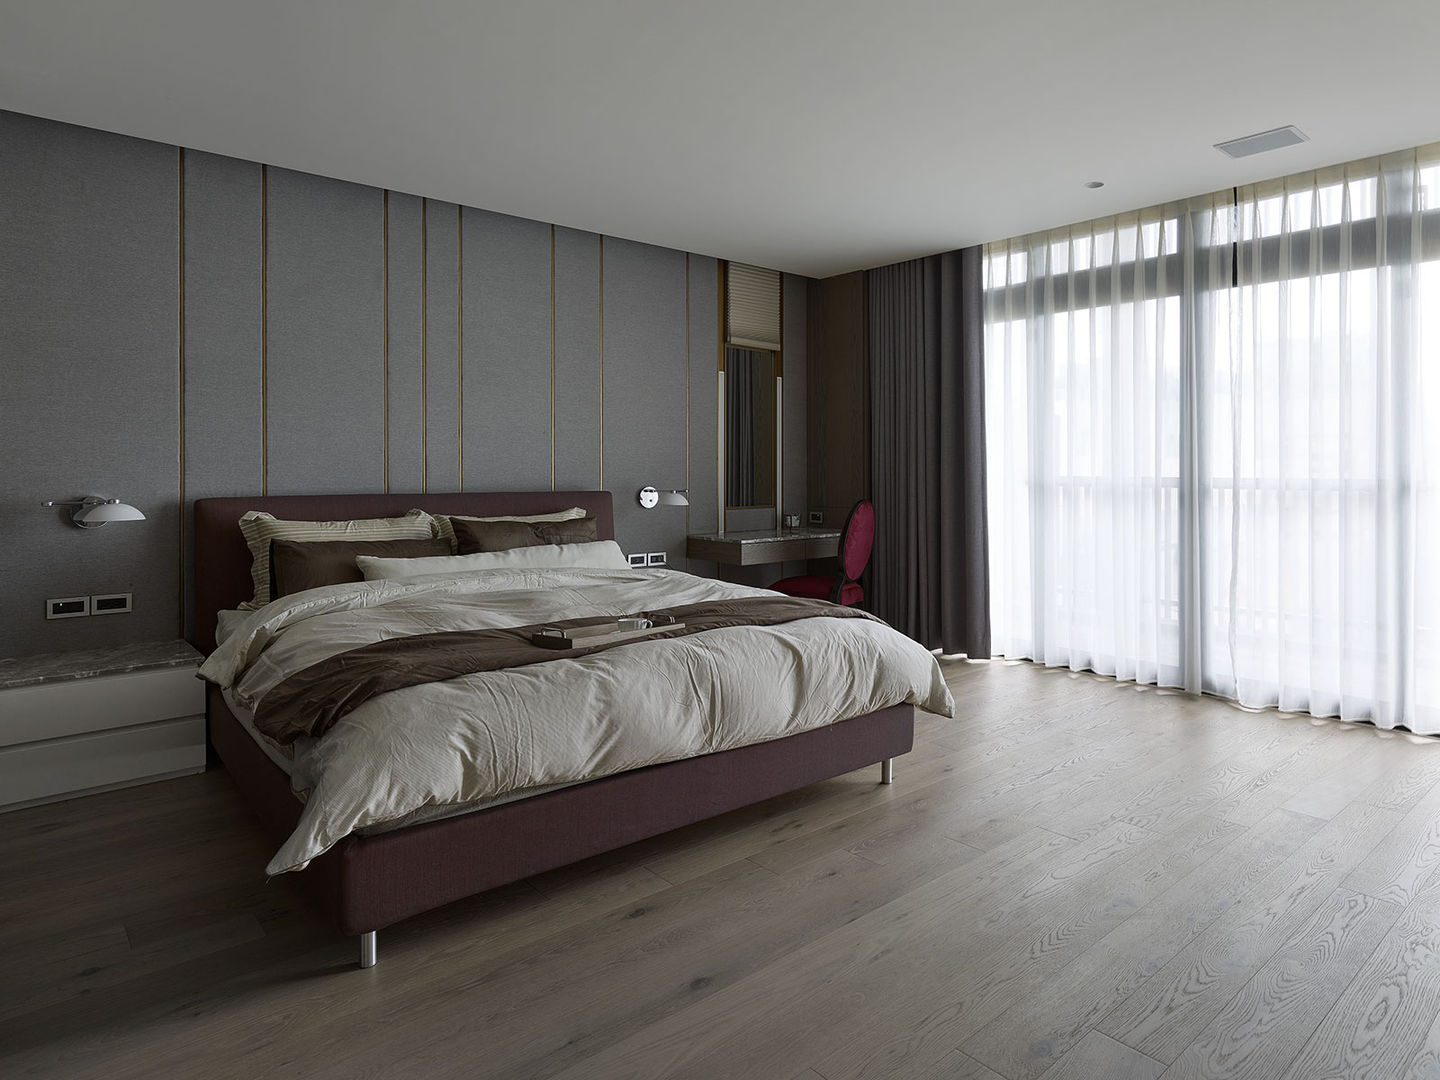 House D 鄧宅, 構築設計 構築設計 モダンスタイルの寝室